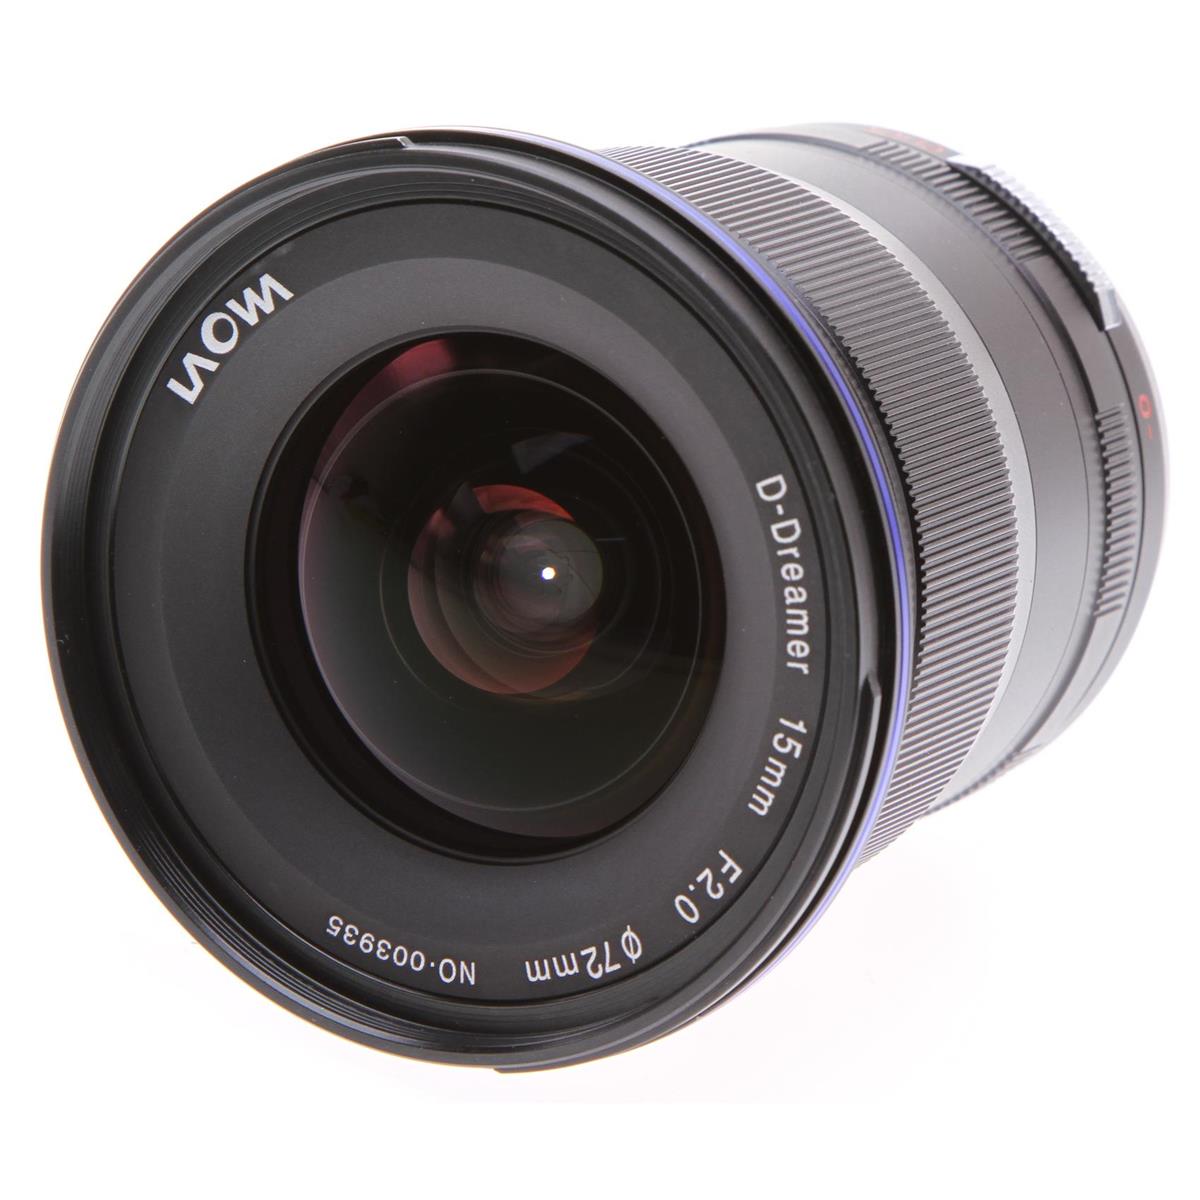 Venus Laowa 15mm f/2 FE Zero-D Lens for Sony E